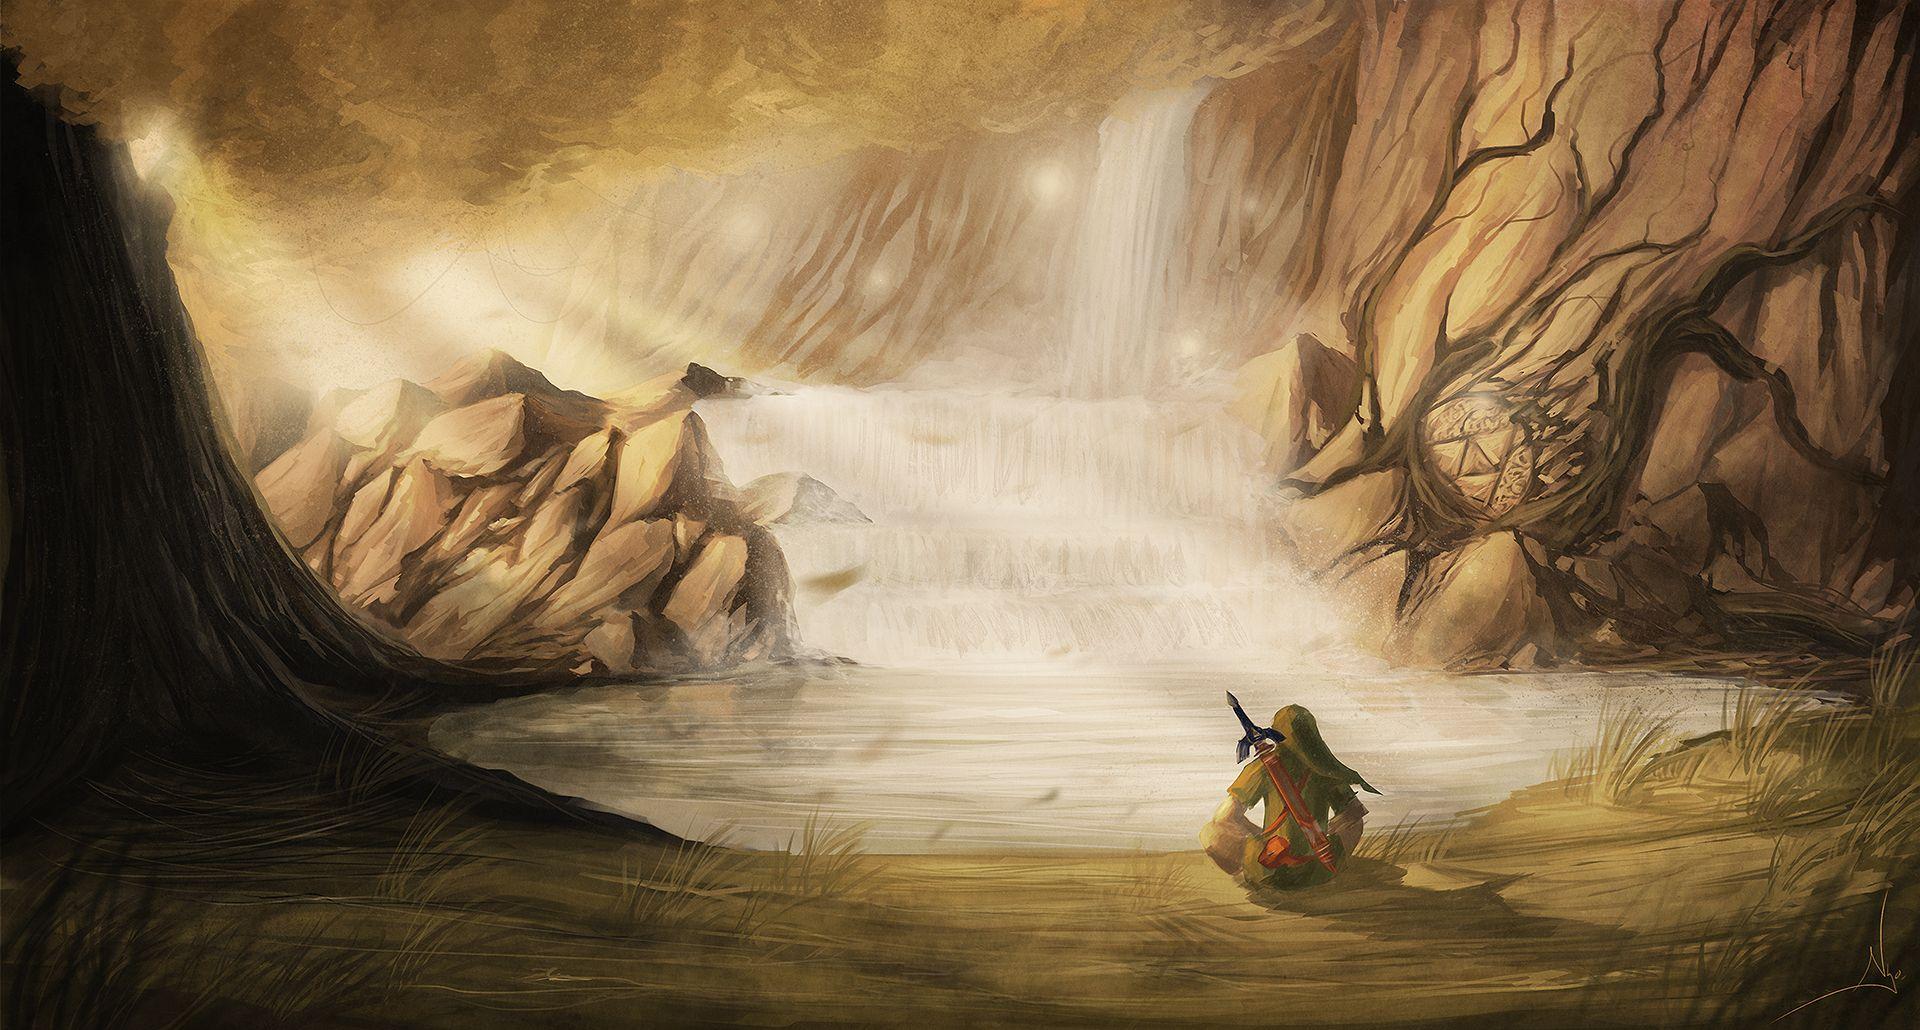 Wallpaper.wiki Free The Legend Of Zelda Twilight Princess Background